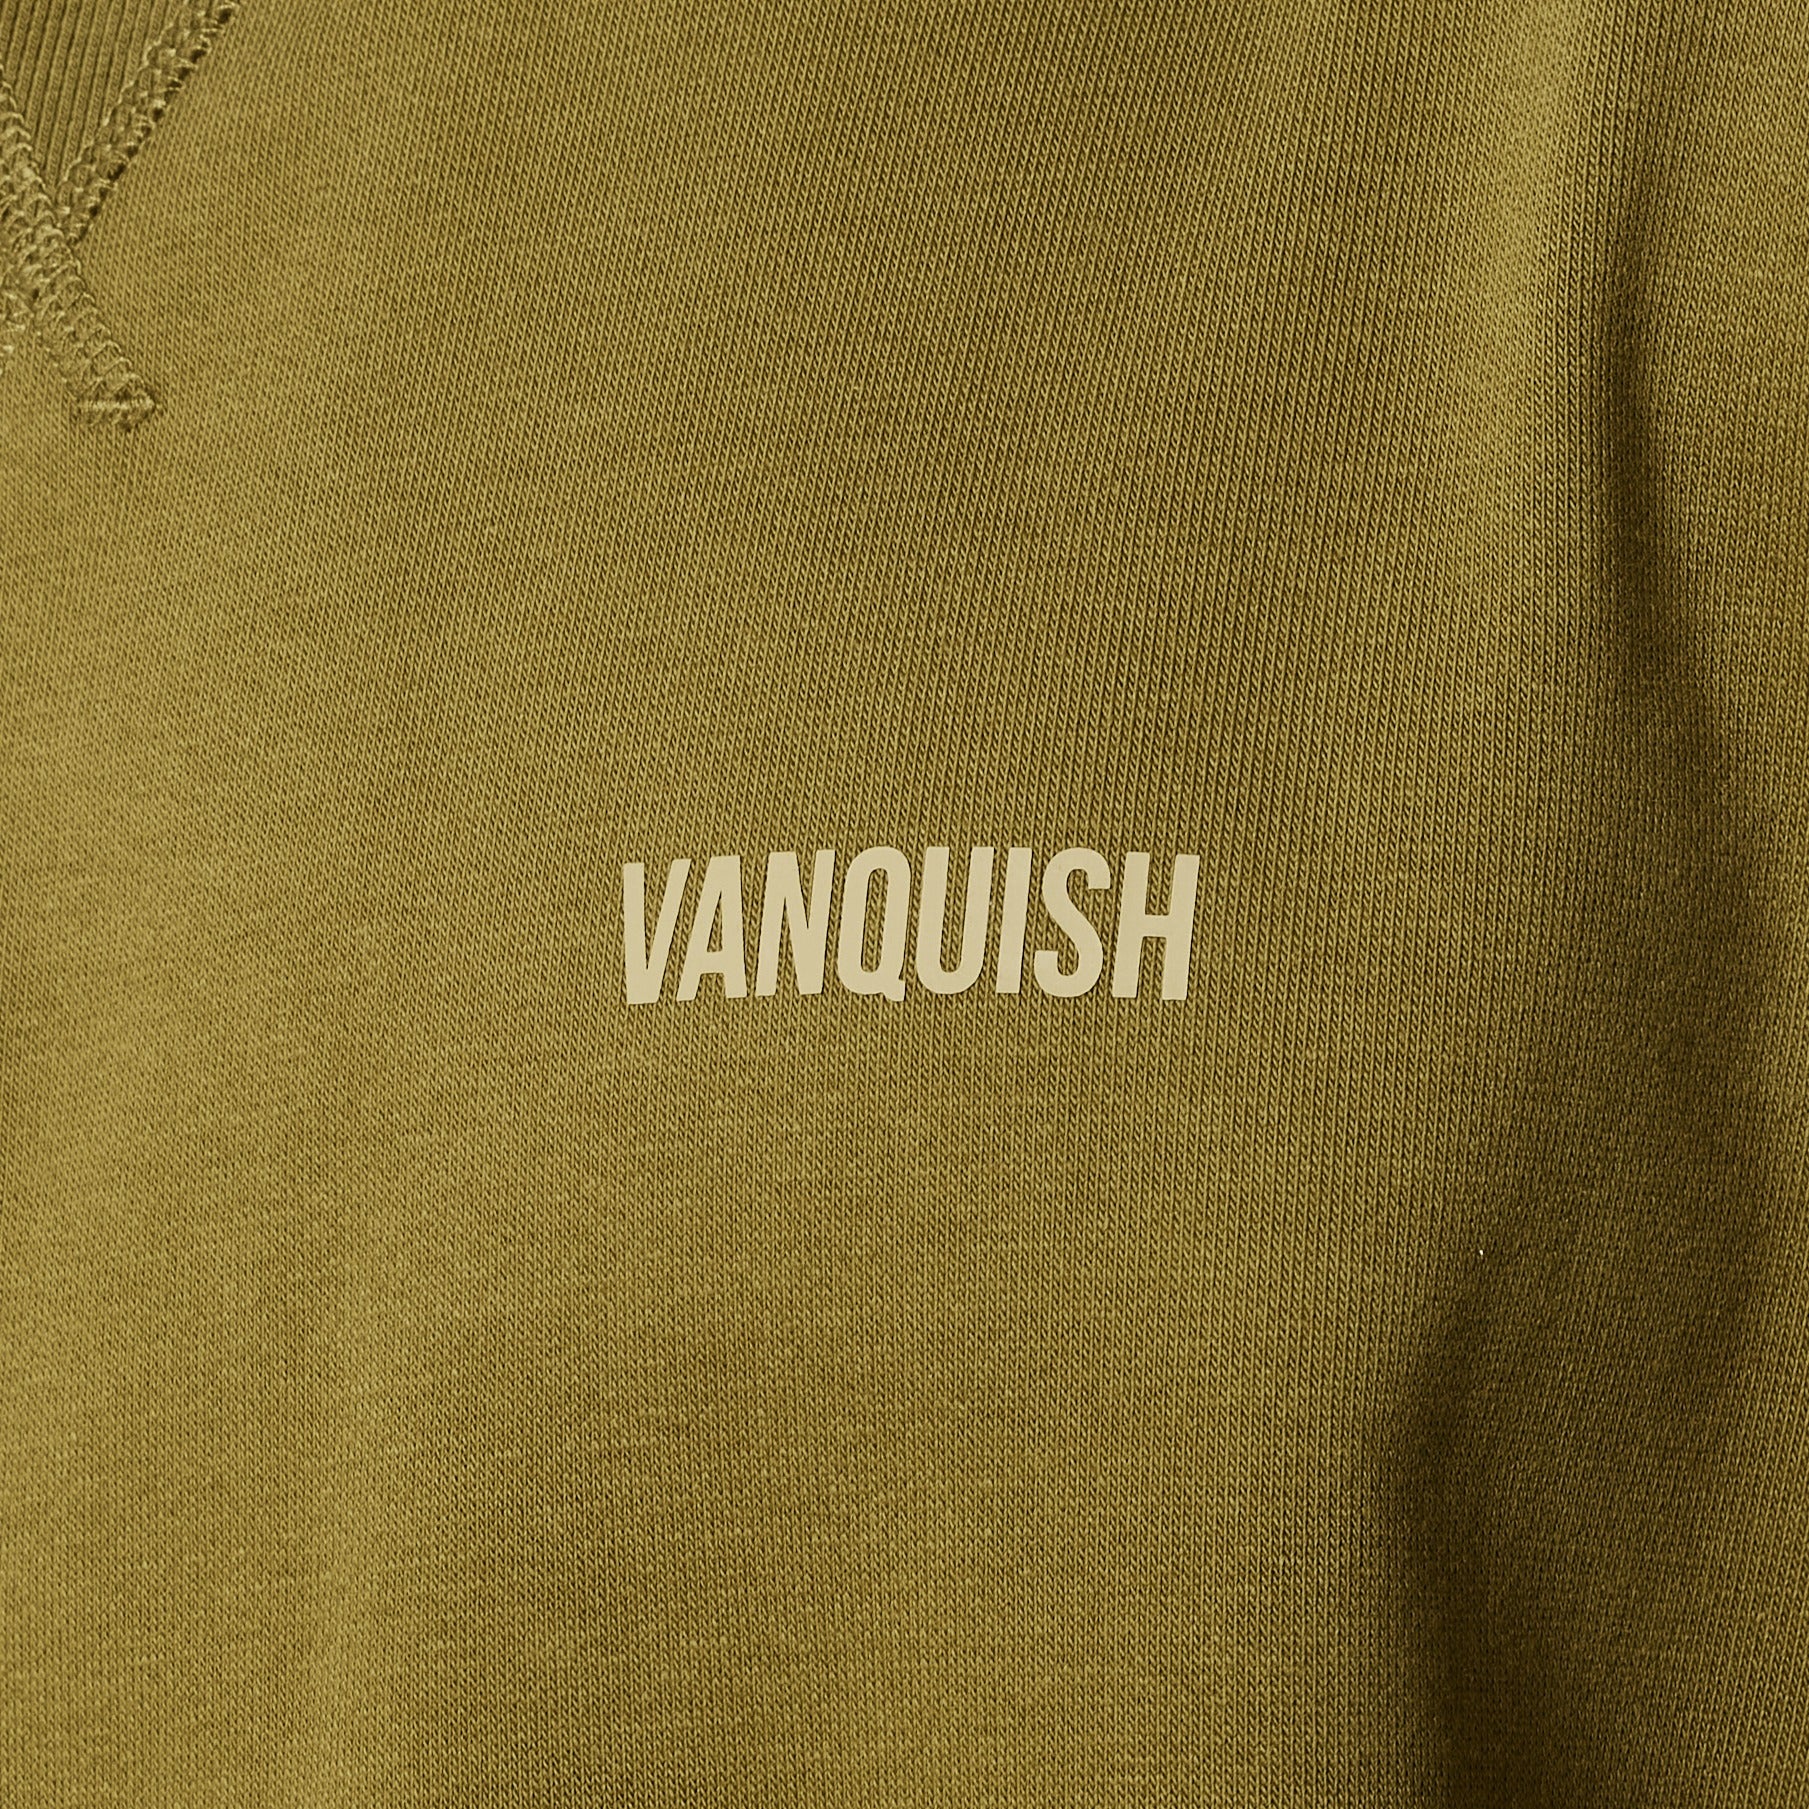 Vanquish Essential Olive Green Oversized Sweatshirt